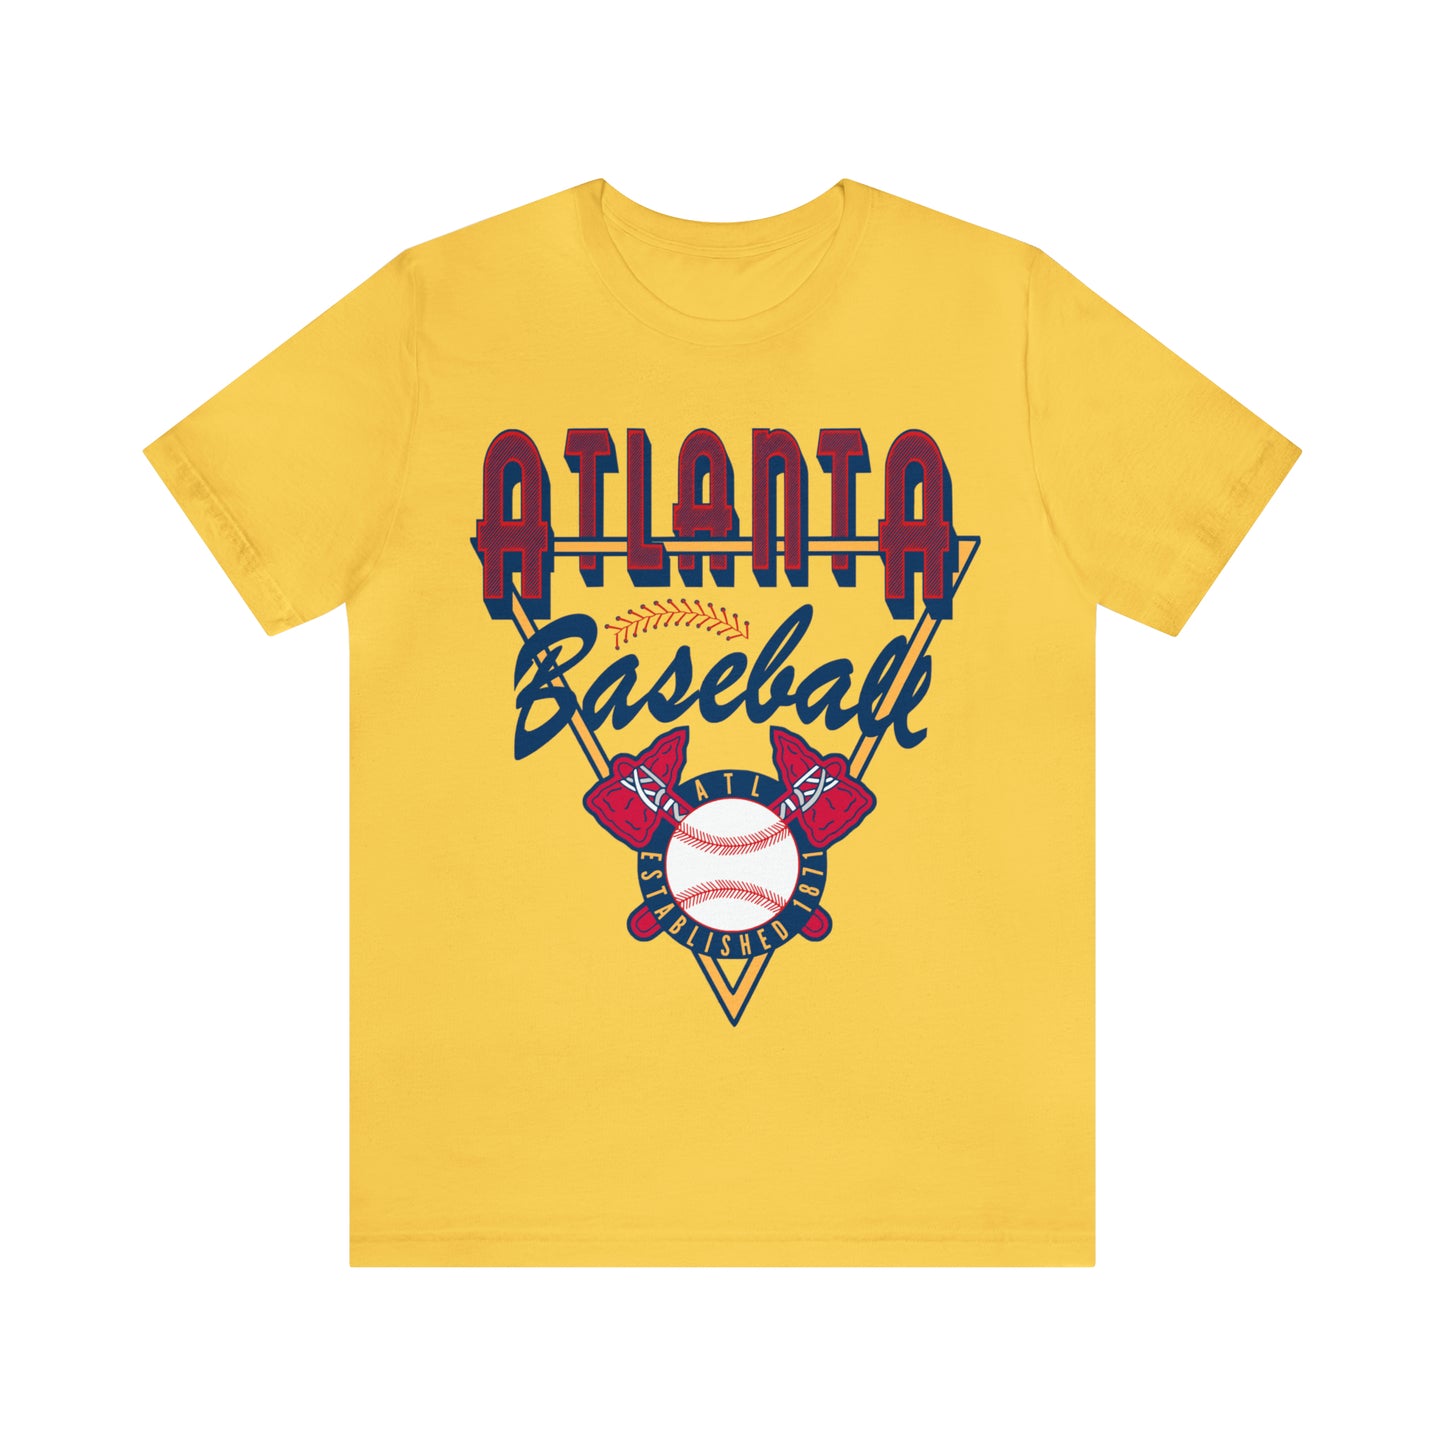 Retro Atlanta Baseball Tee - Vintage Style Short Sleeve T-Shirt - MajLeagBall Baseball Gear - Vintage Men's & Women's Apparel